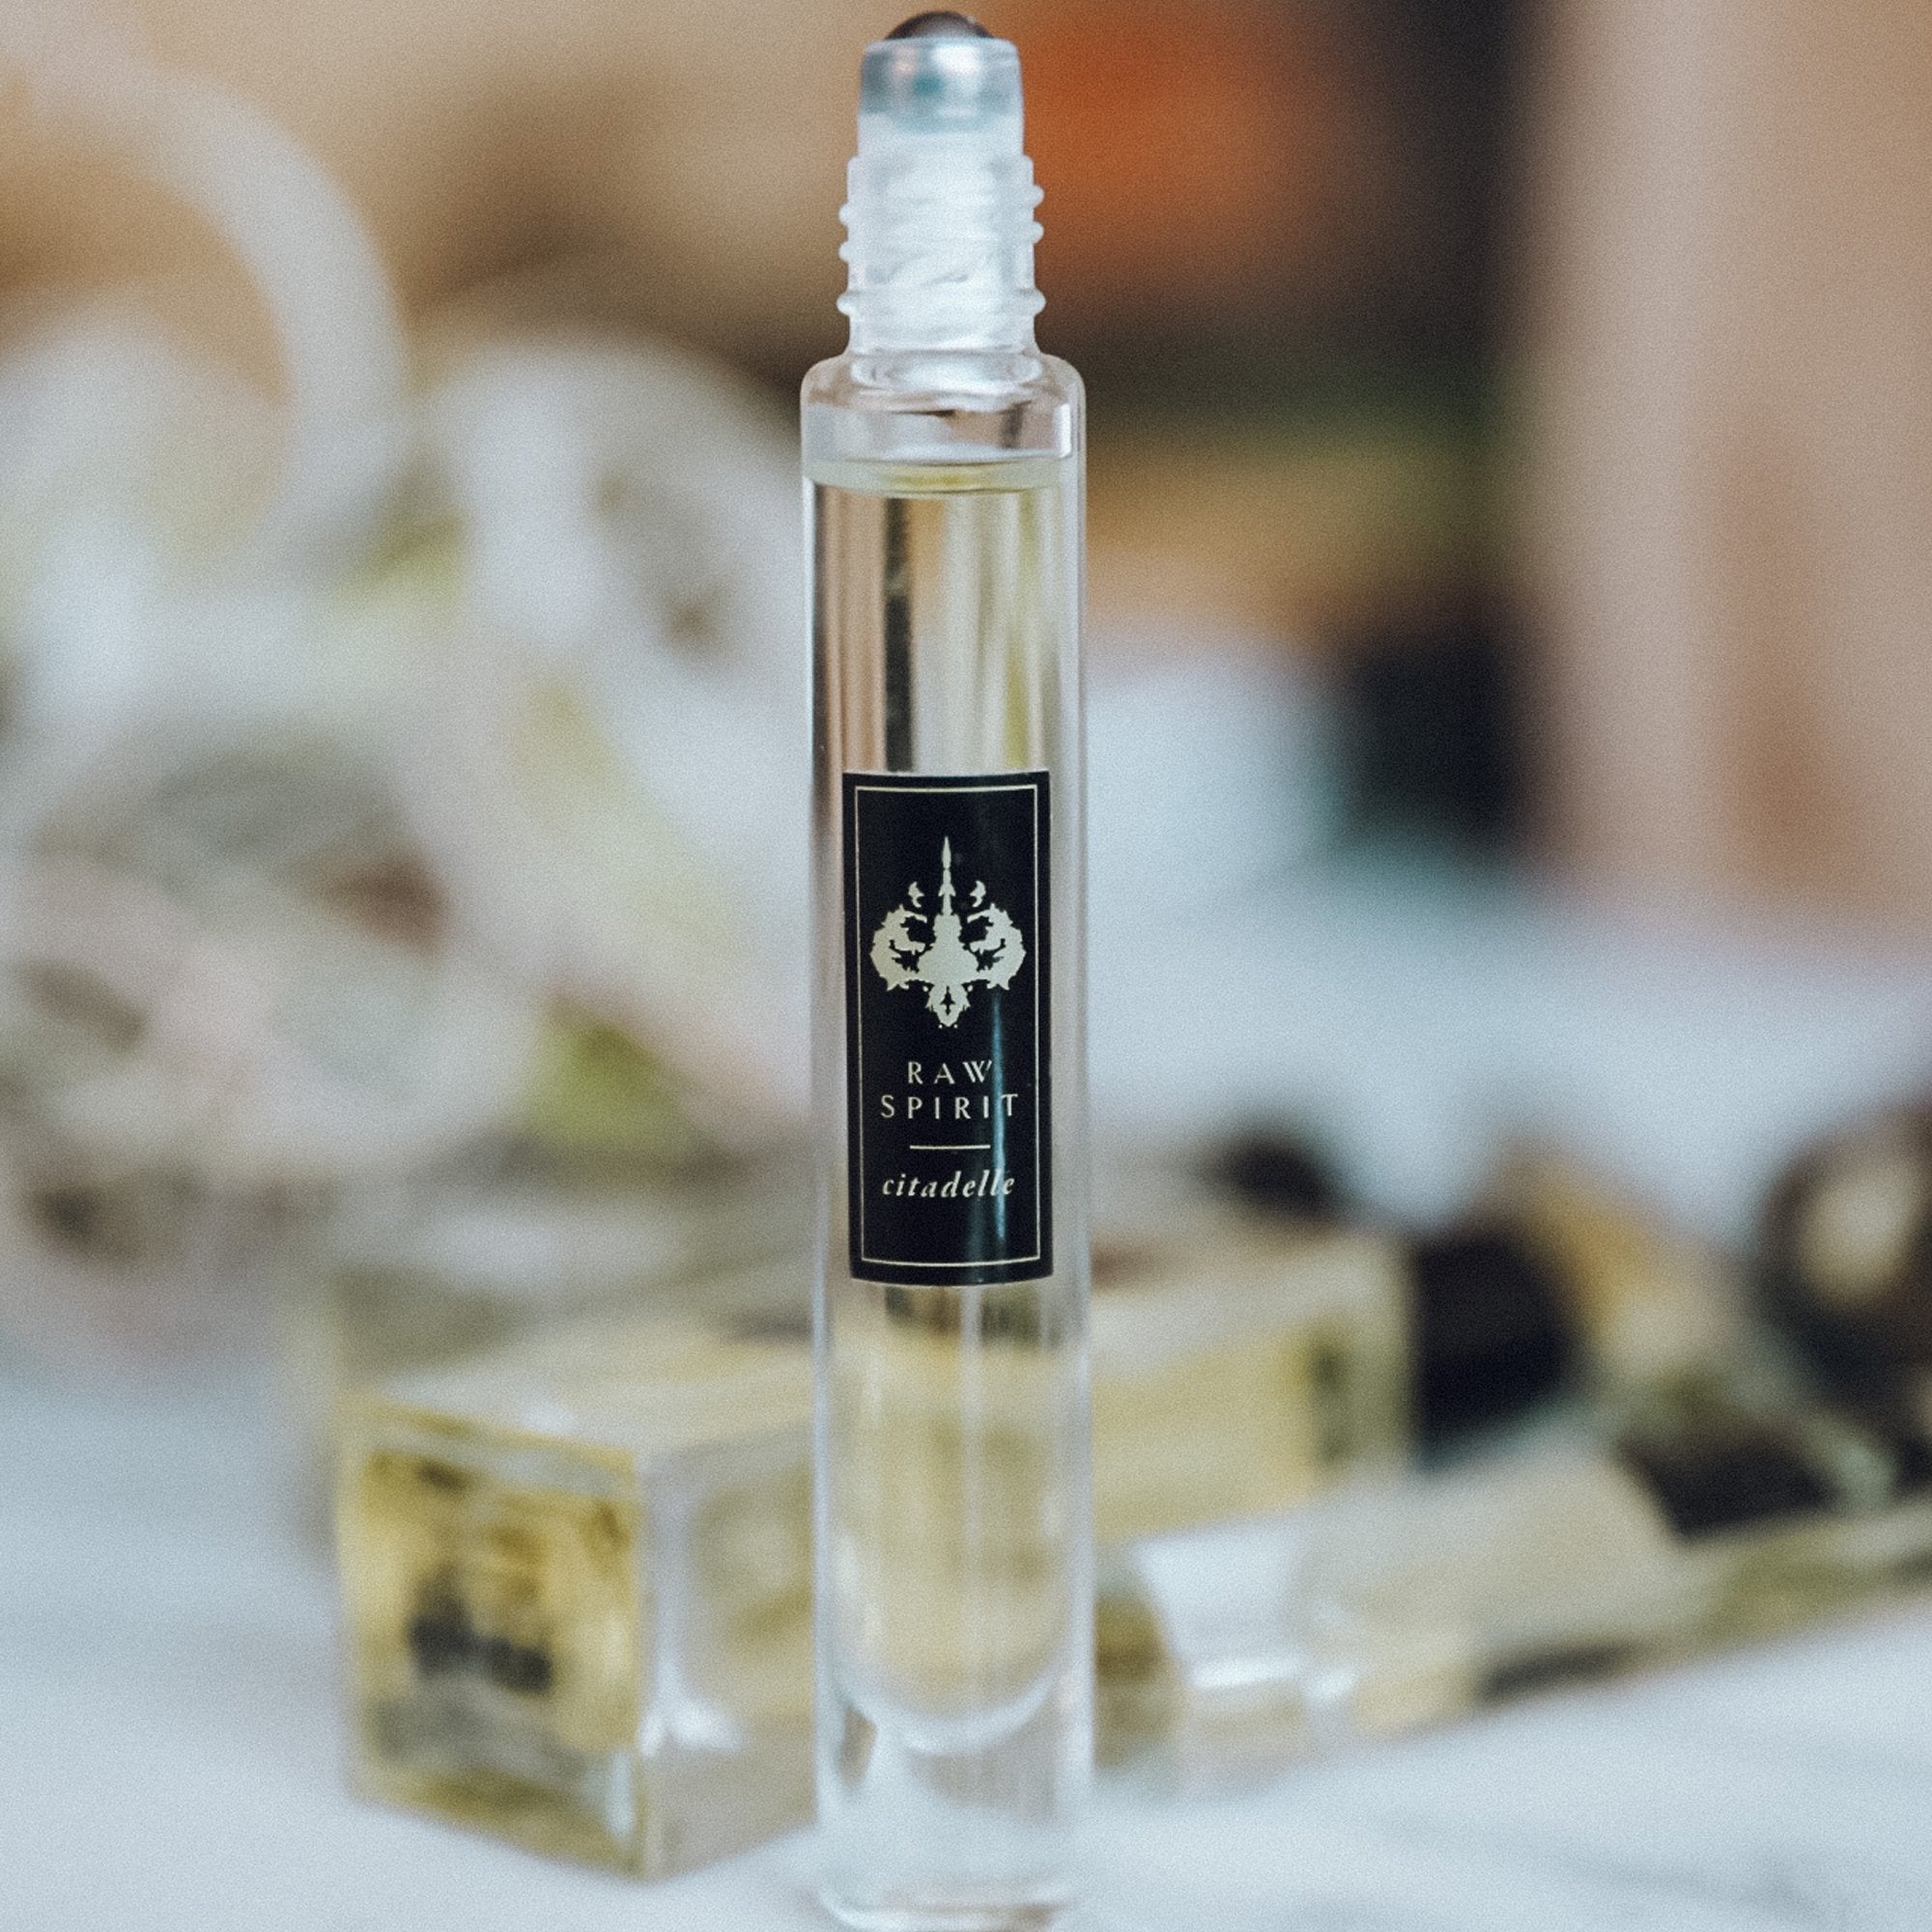 Raw Spirit Citadelle unisex perfume is a fresh, clean, modern interpretation of a classic vetiver fragrance, blending premium Haitian vetiver, marigold, pear, bergamot, lemon, cinnamon, nutmeg, amberwood, musk and cedarwood.